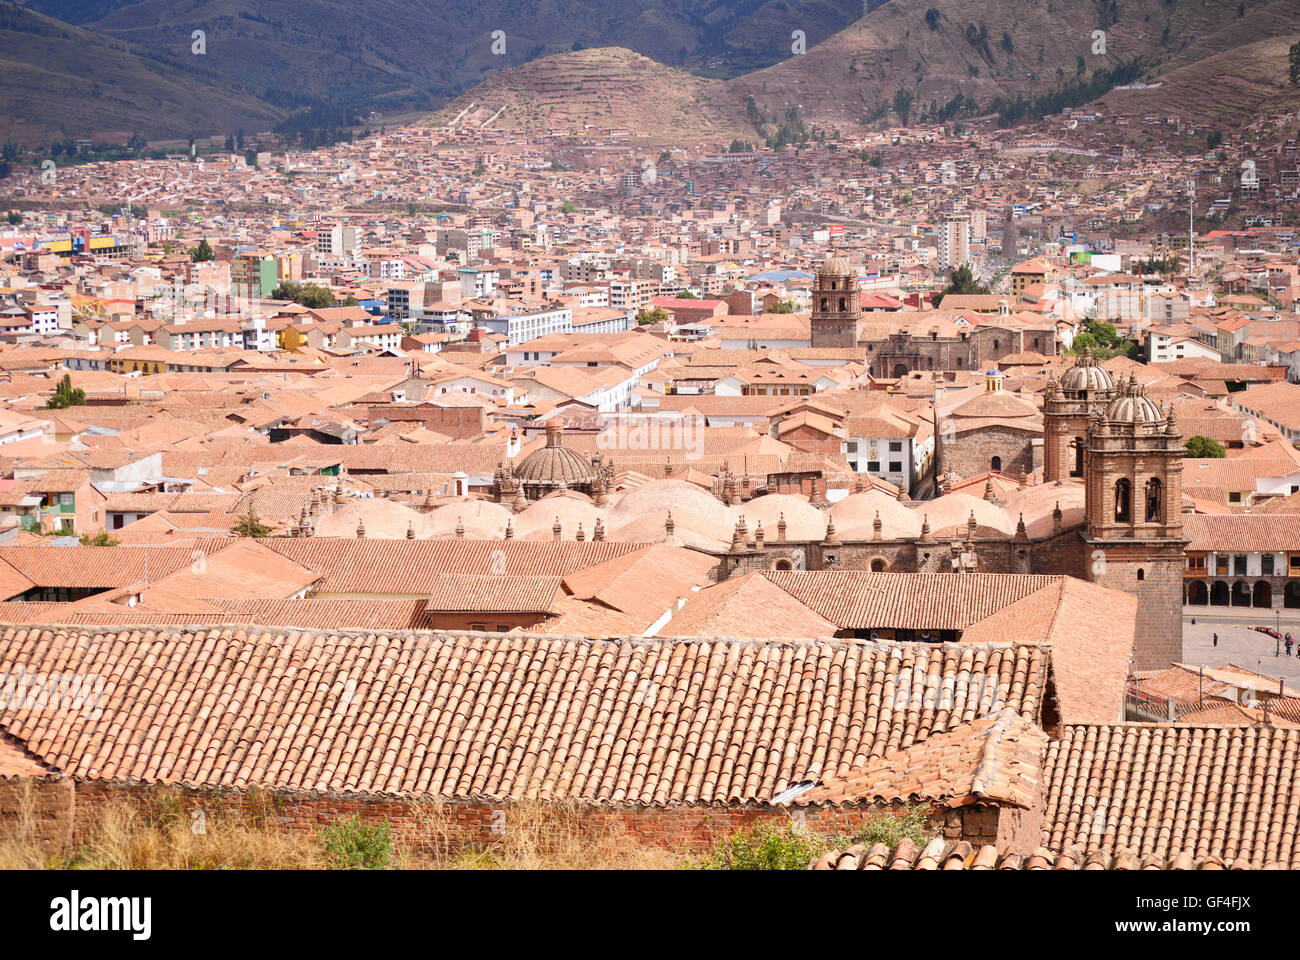 The sea of orange tiled roof of Cuzco city Stock Photo